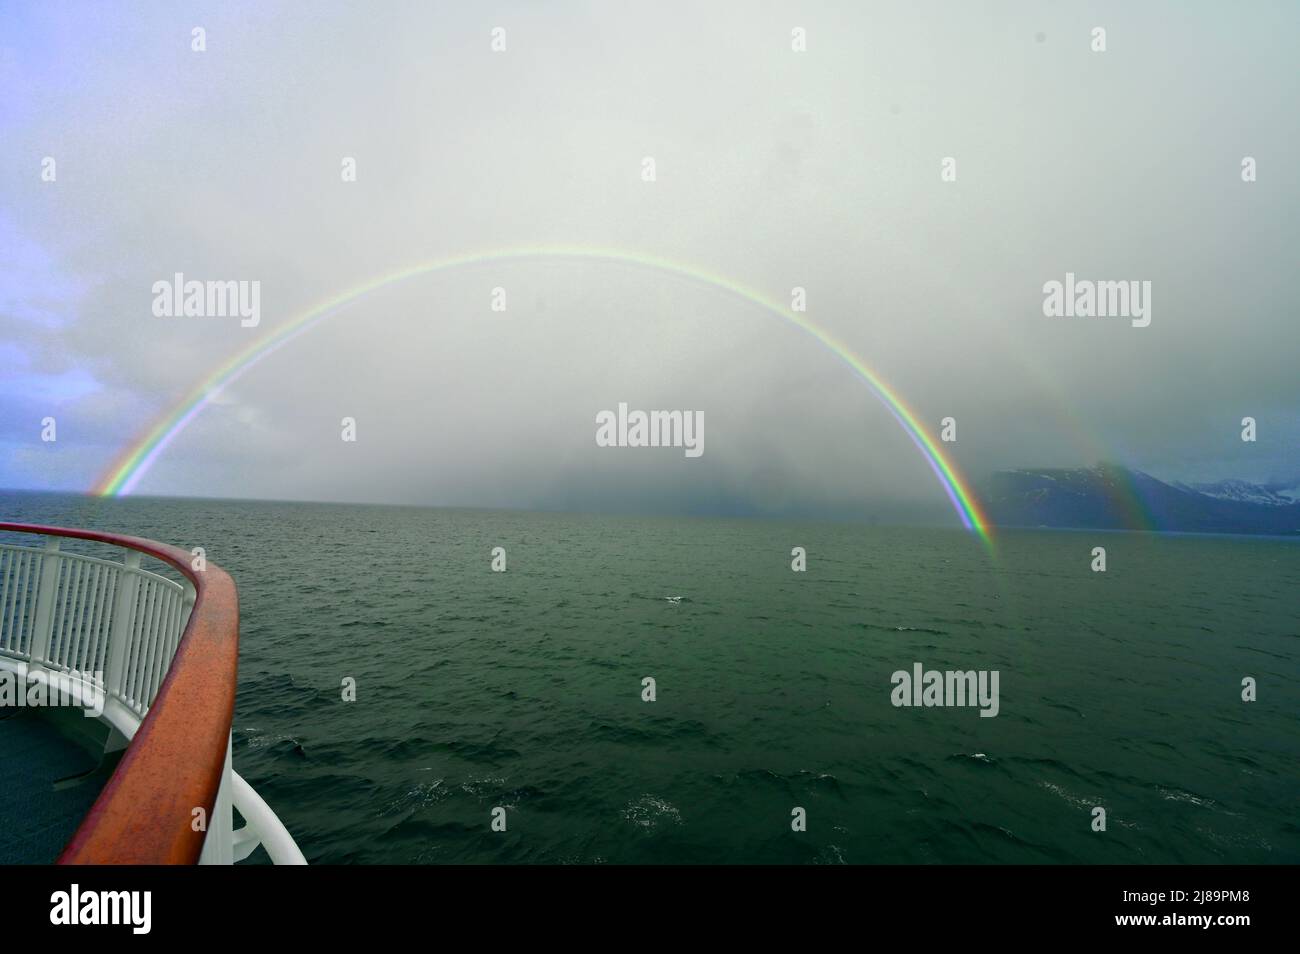 ganzer, im Meer versinkender bunter Regenbogen vom Schiff aus gesehen Foto de stock